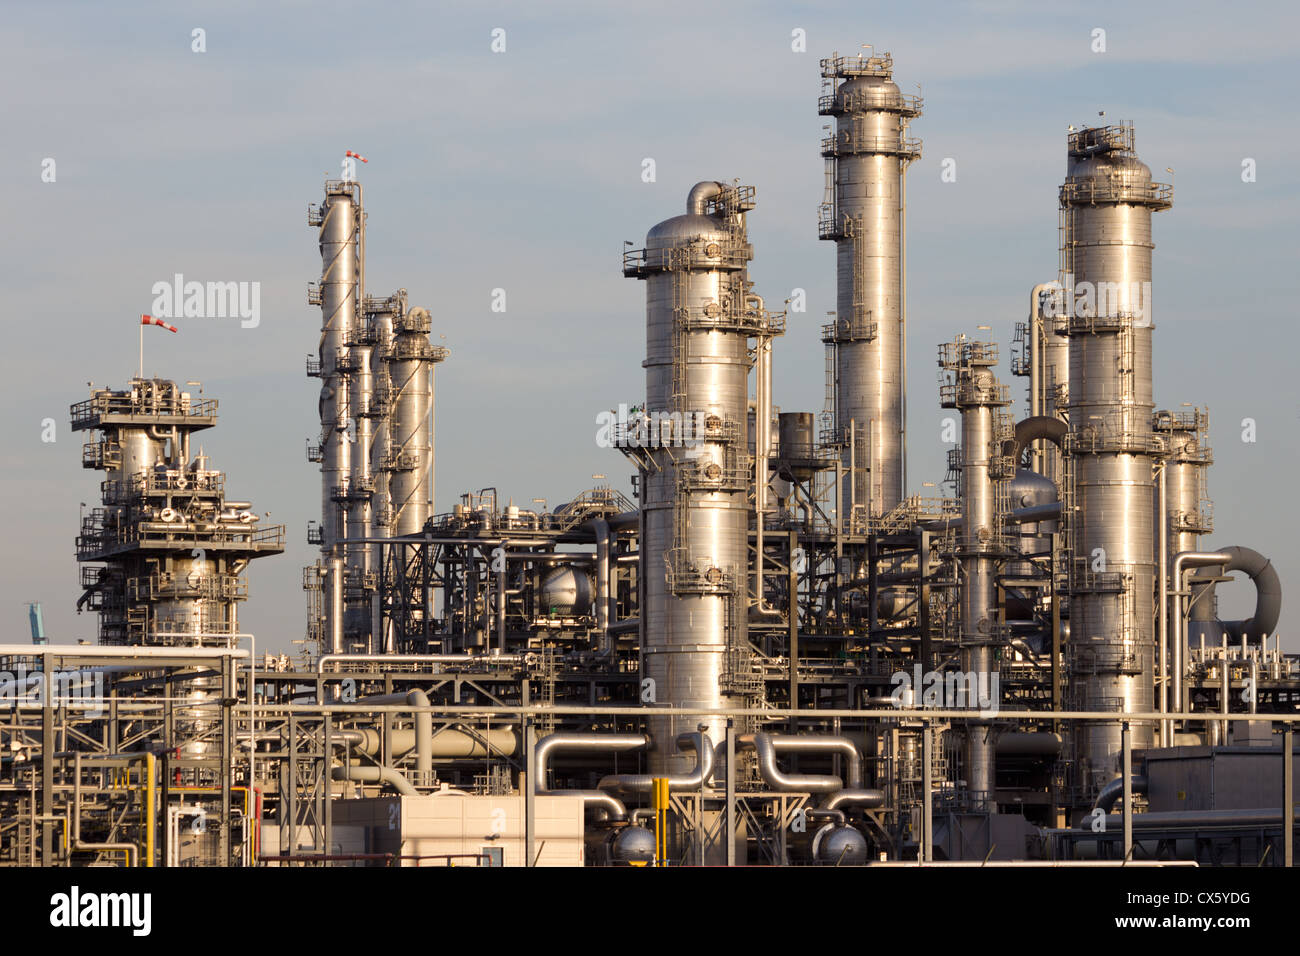 La petrolchimica impianto industriale Foto Stock